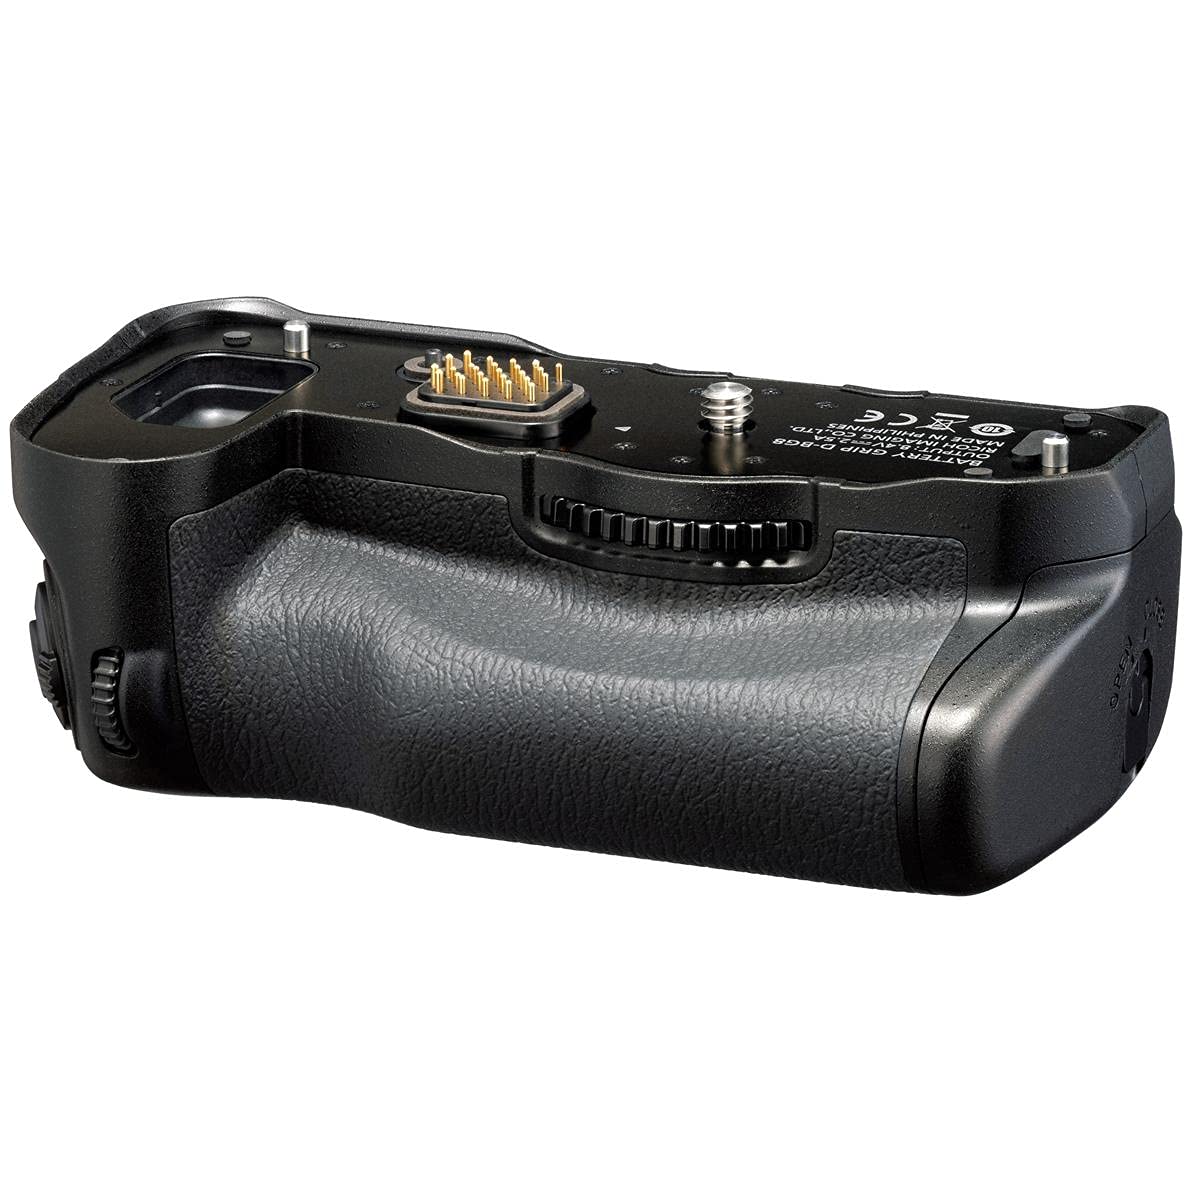 Pentax K-3 Mark III APS-C-Format DSLR Camera Body, Silver with Pentax D-BG8 Battery Grip, Black